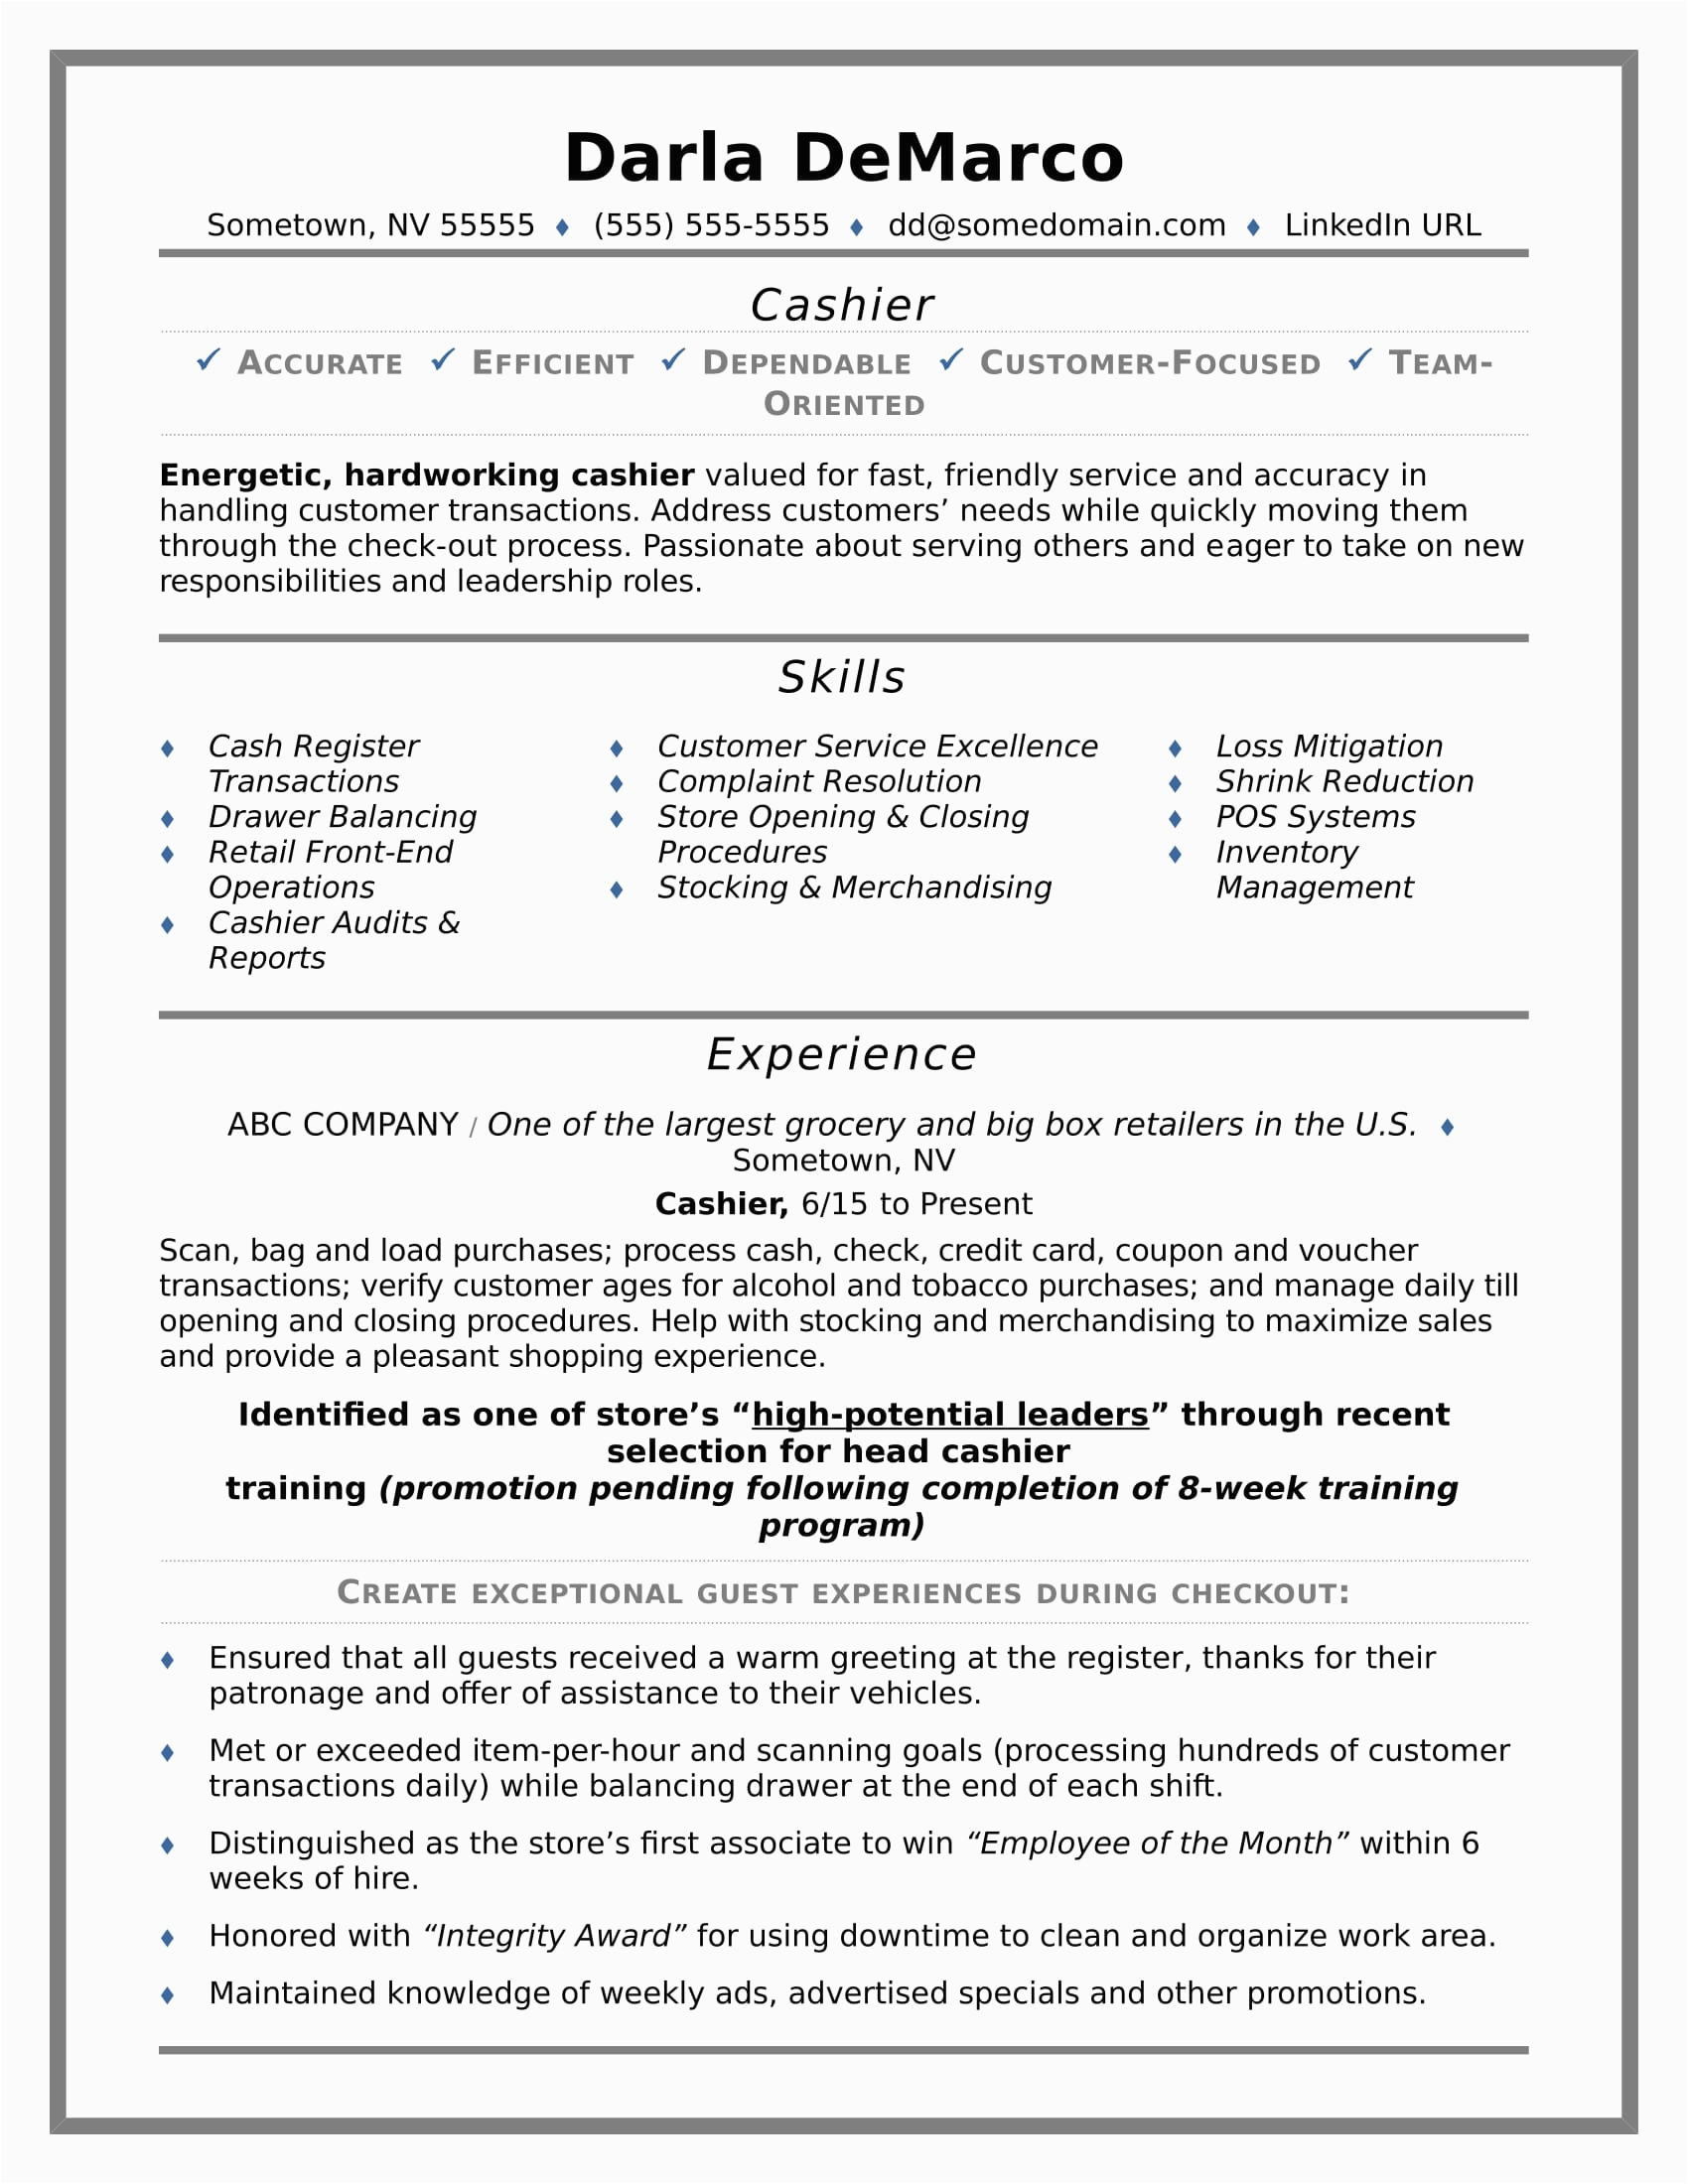 Cashier Job Description for Resume Sample Cashier Resume Sample